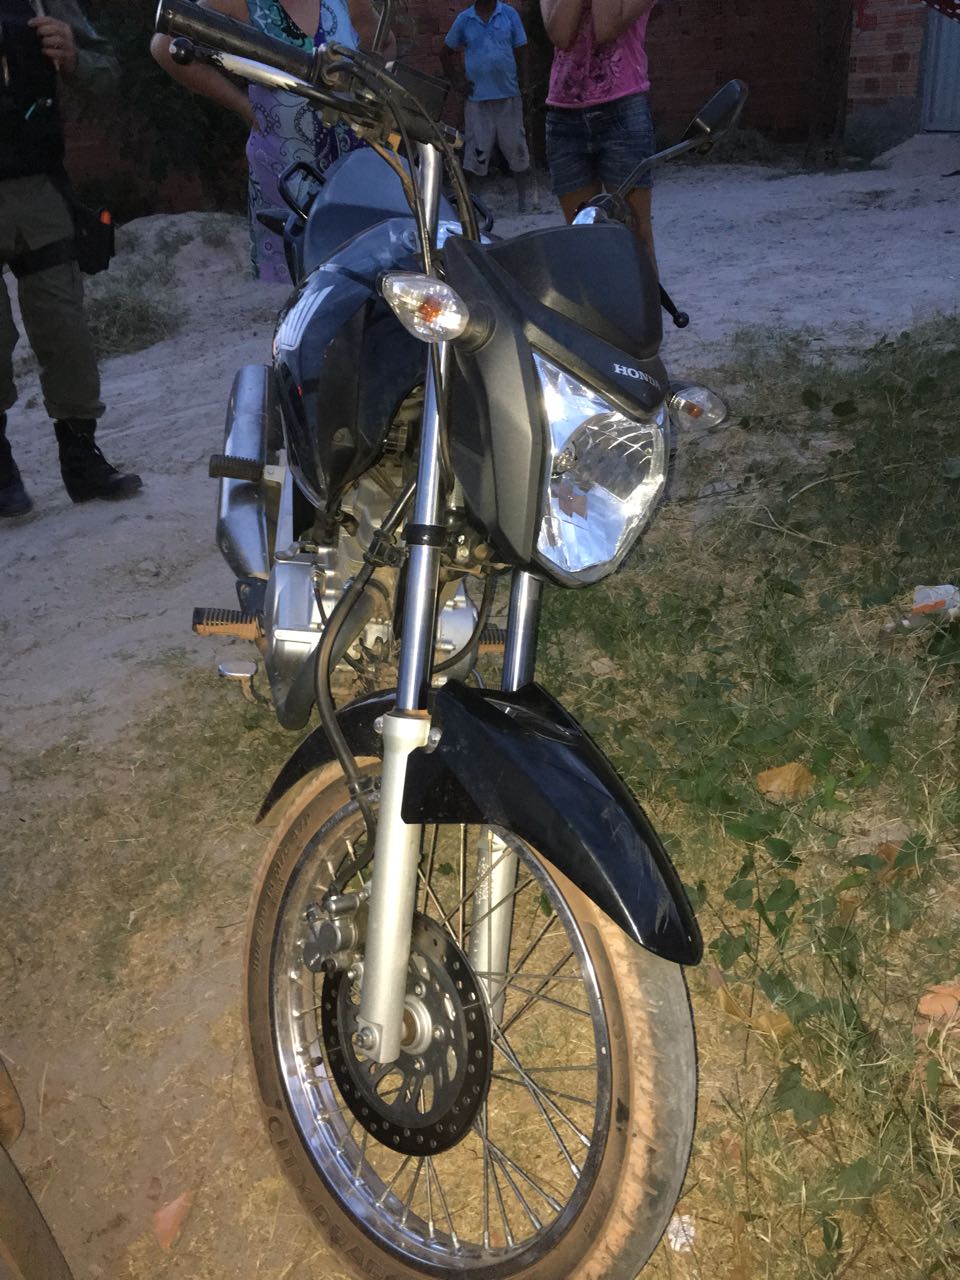 Motocicleta recuperada após roubo em Teresina 